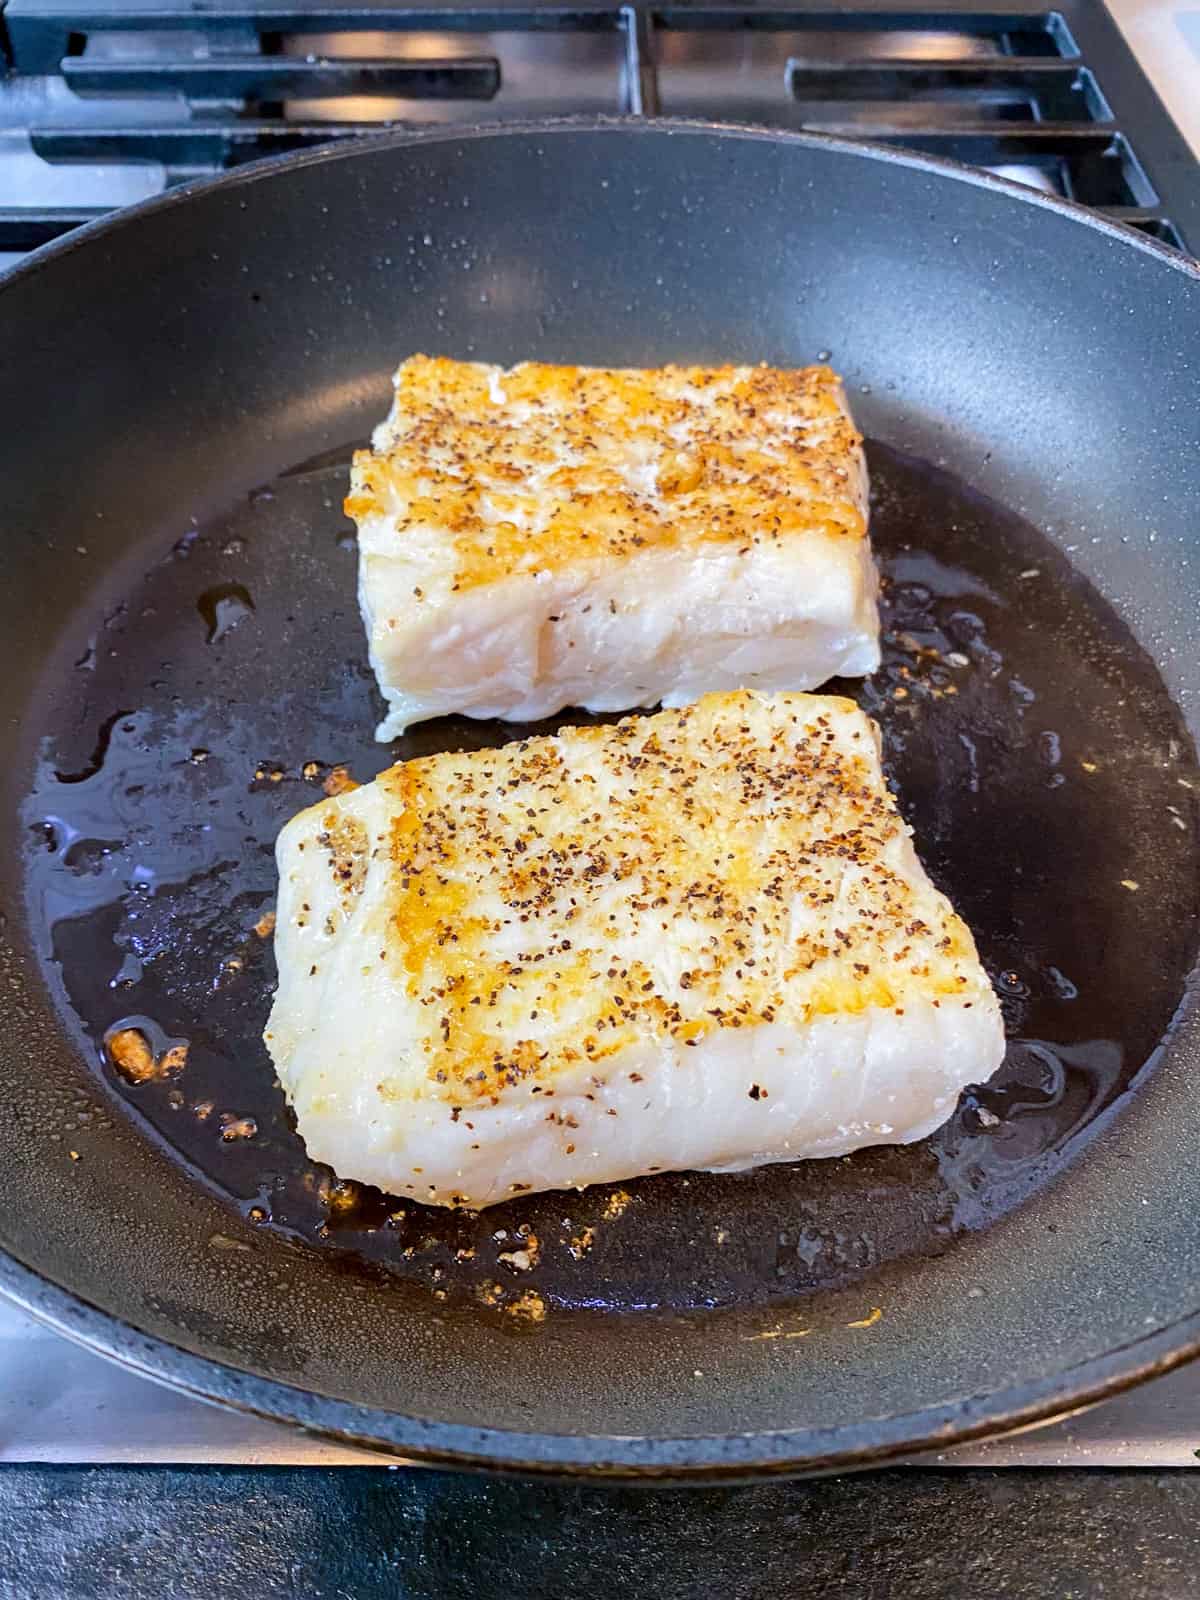 Sear the halibut filets until deeply golden on both sides.